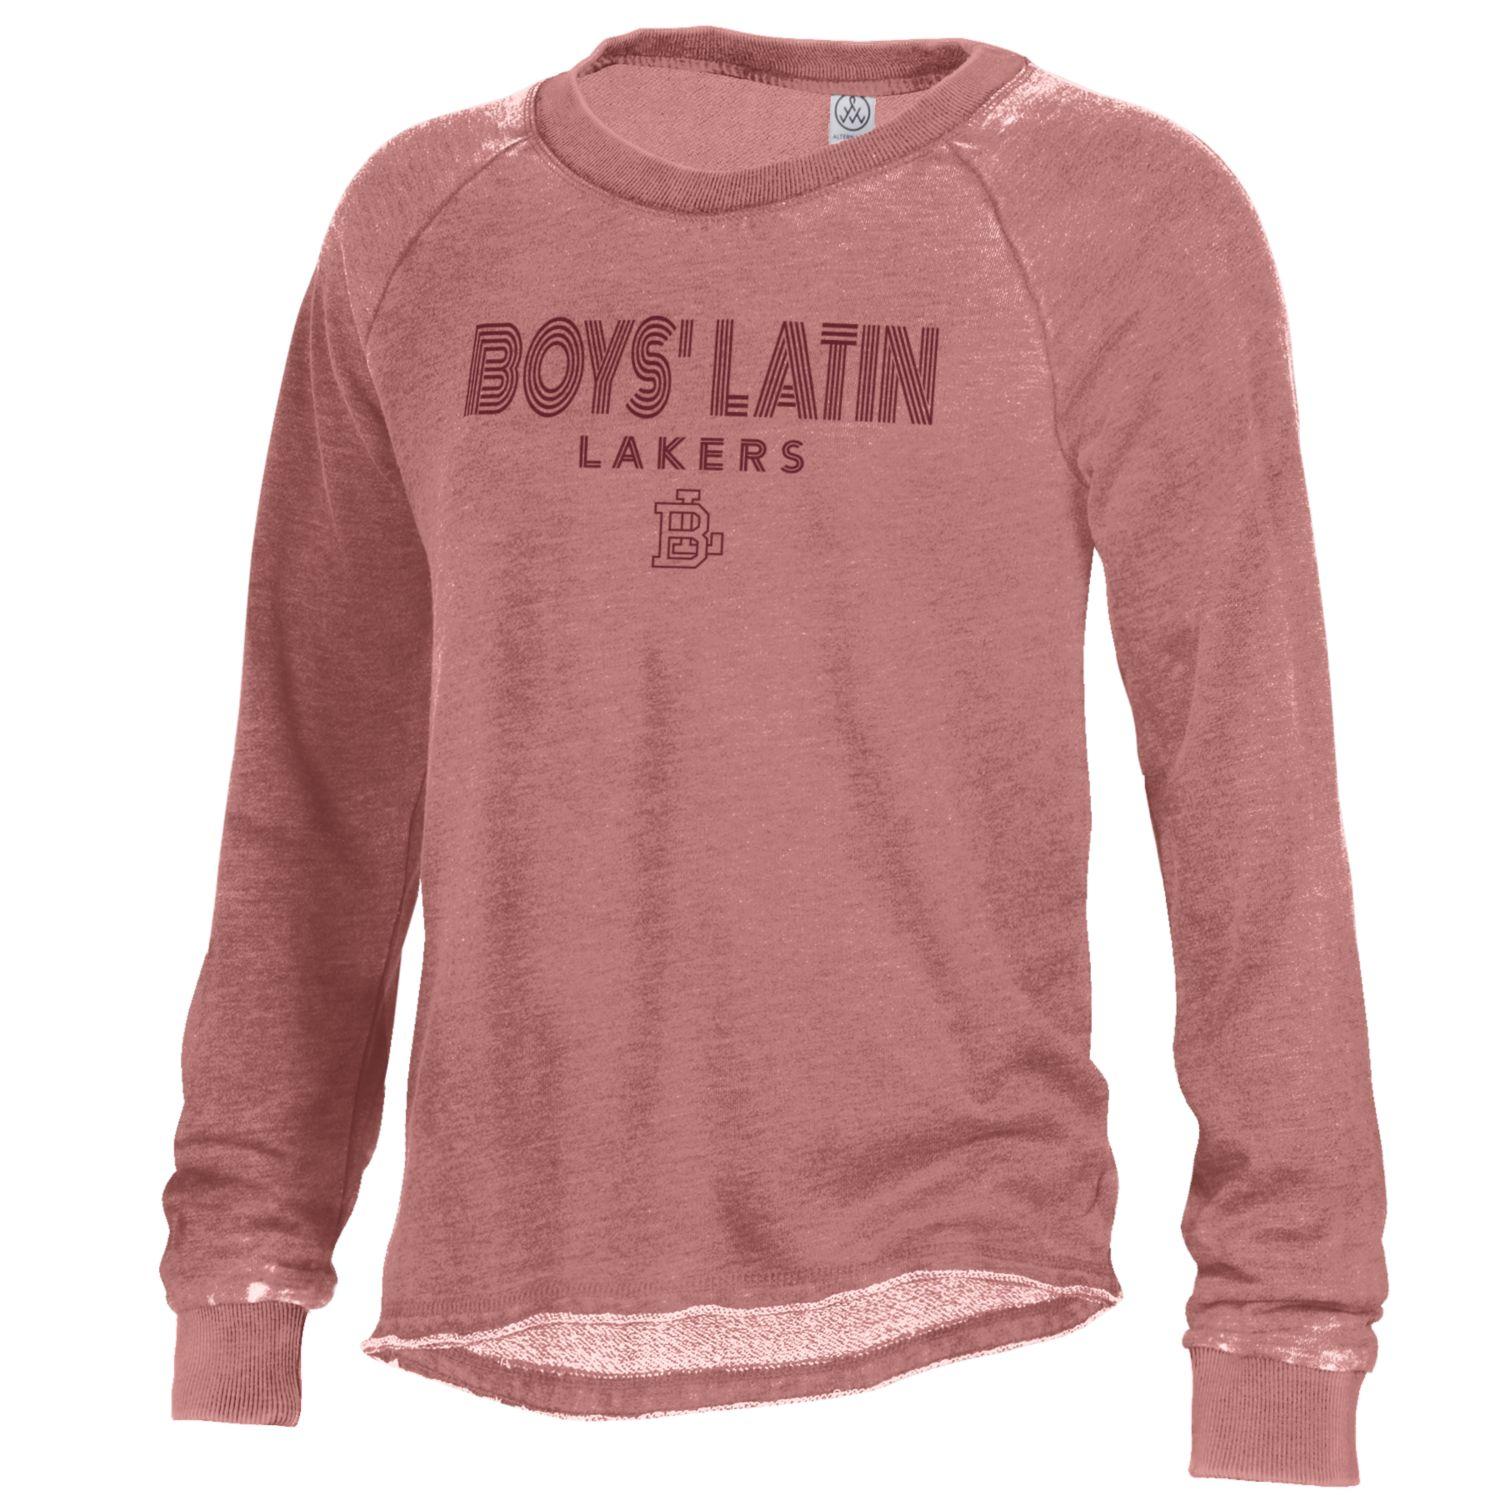 Ladies Vintage Crew Neck Sweatshirt by Alternative – shopboyslatin